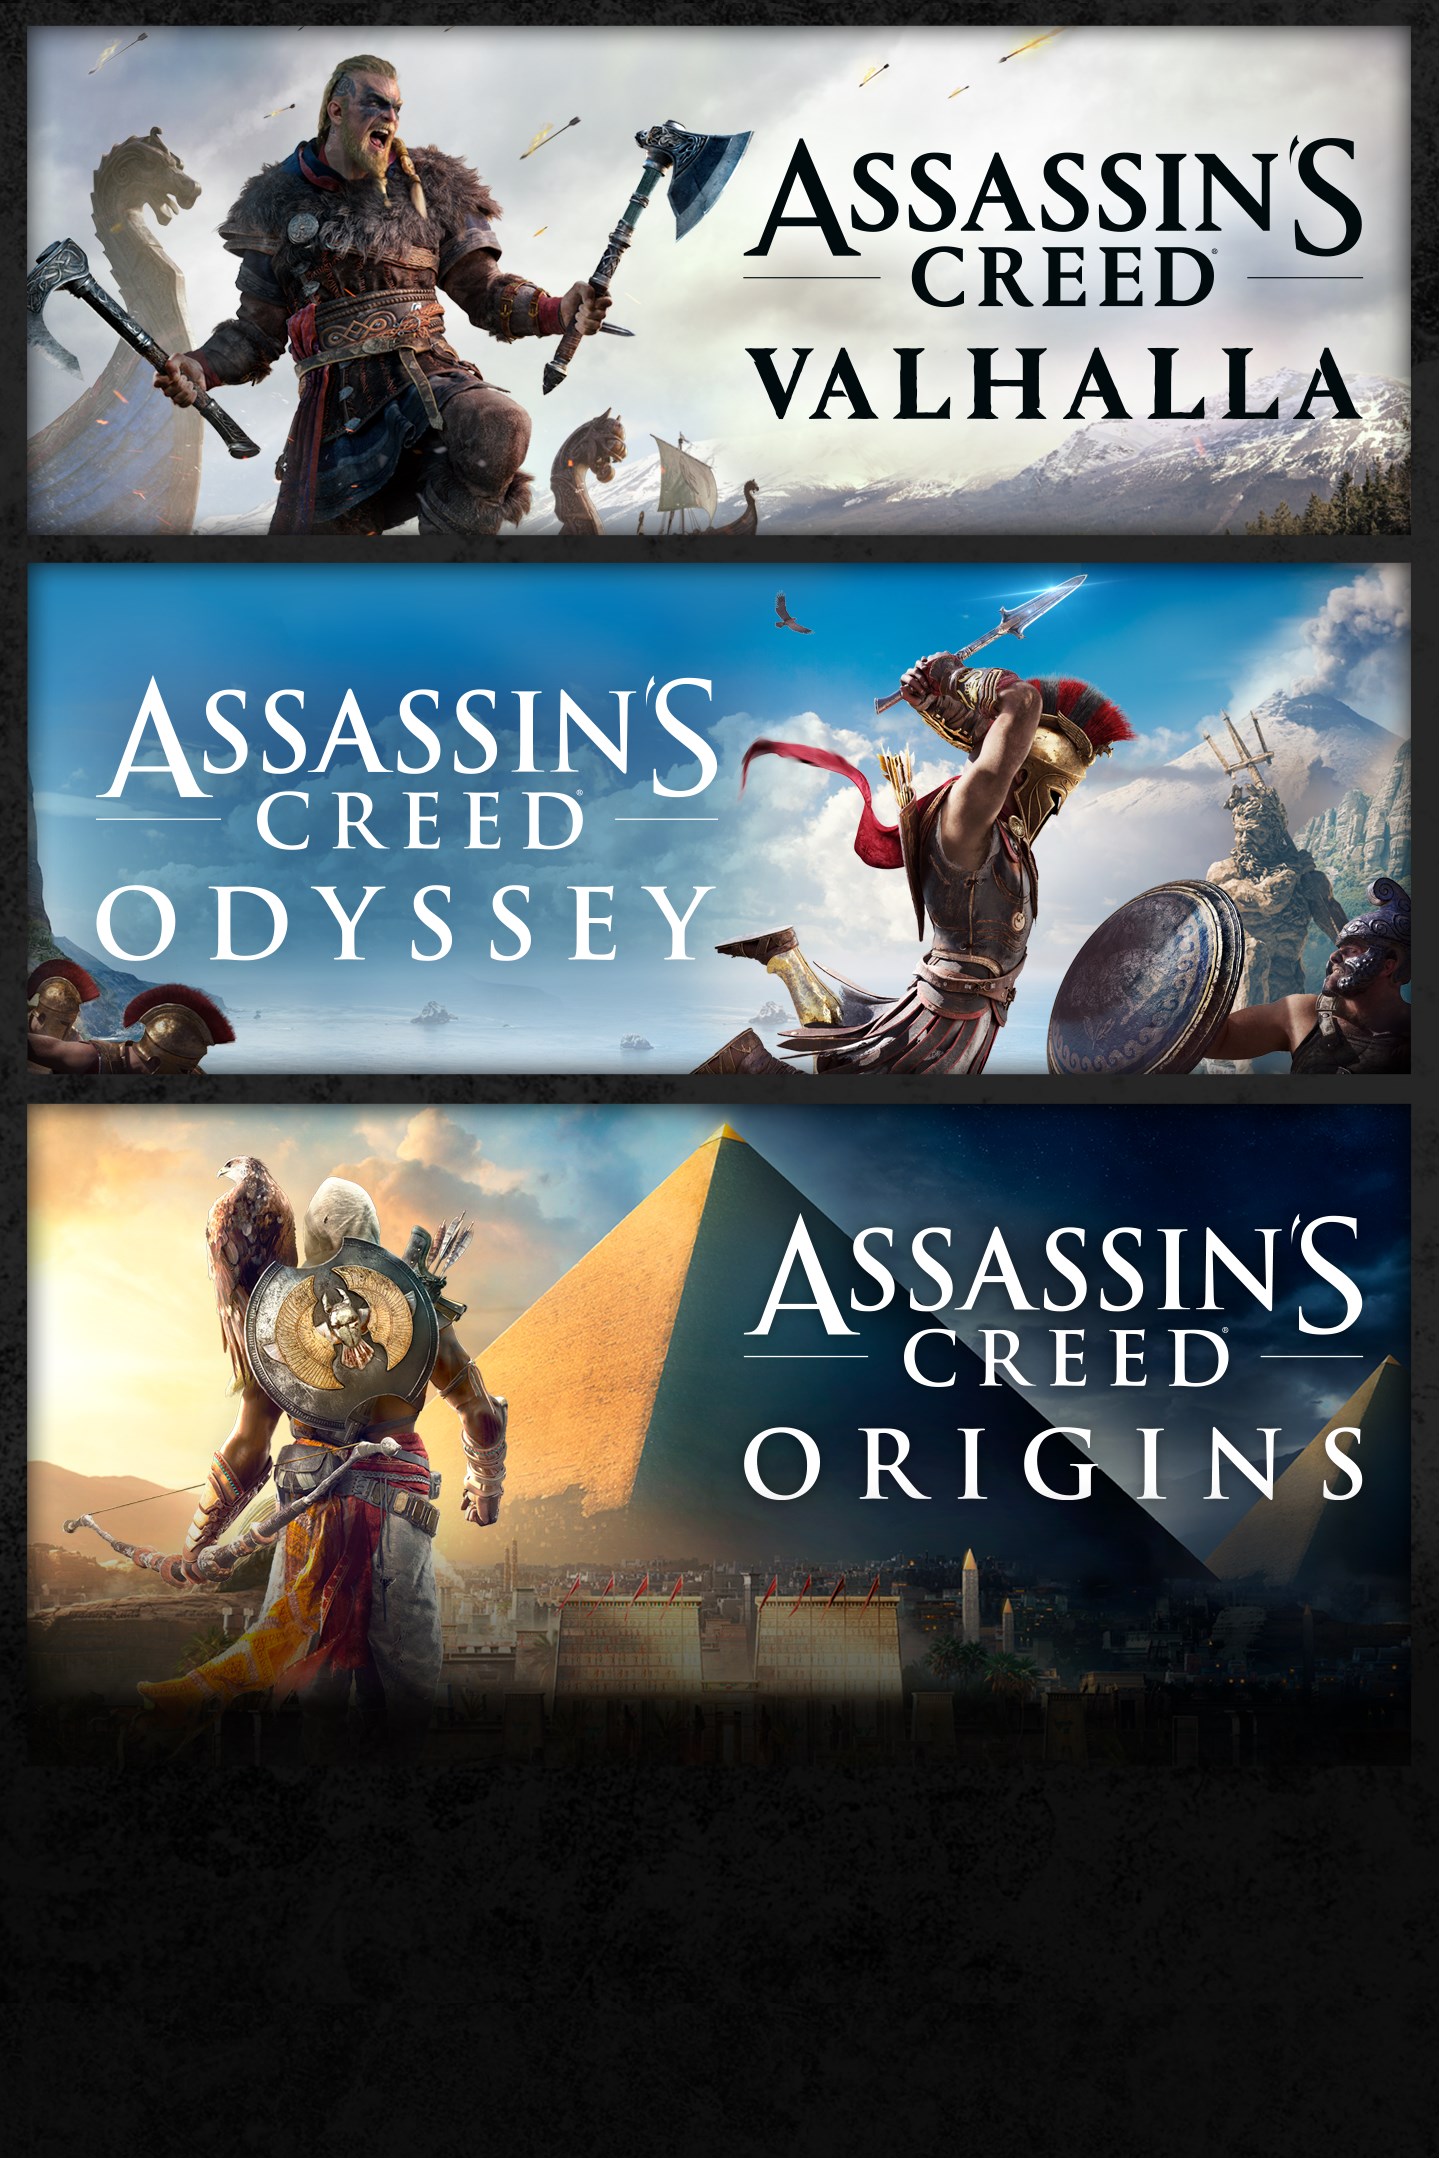 Assassin's Creed® Valhalla + Watch Dogs®: Legion Bundle